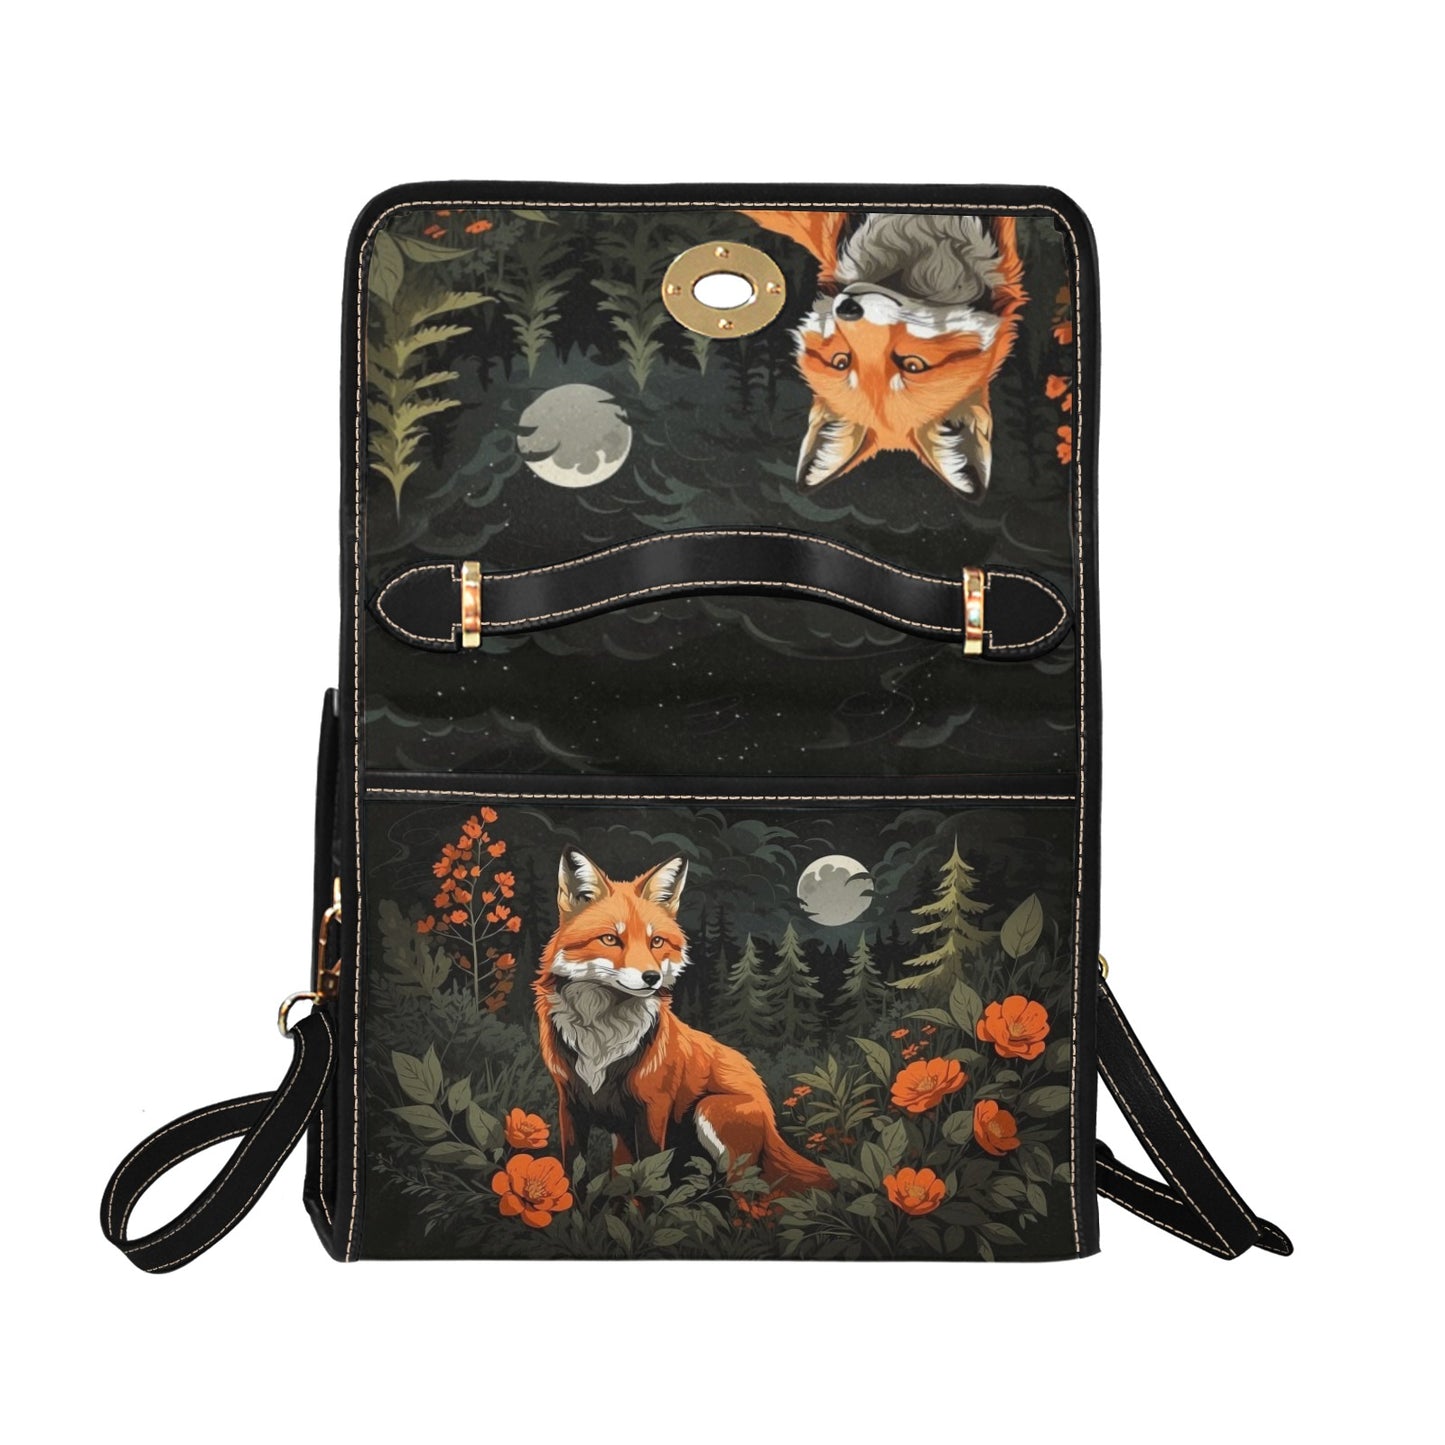 Orange Fox Purse Handbag, Crossbody Bag